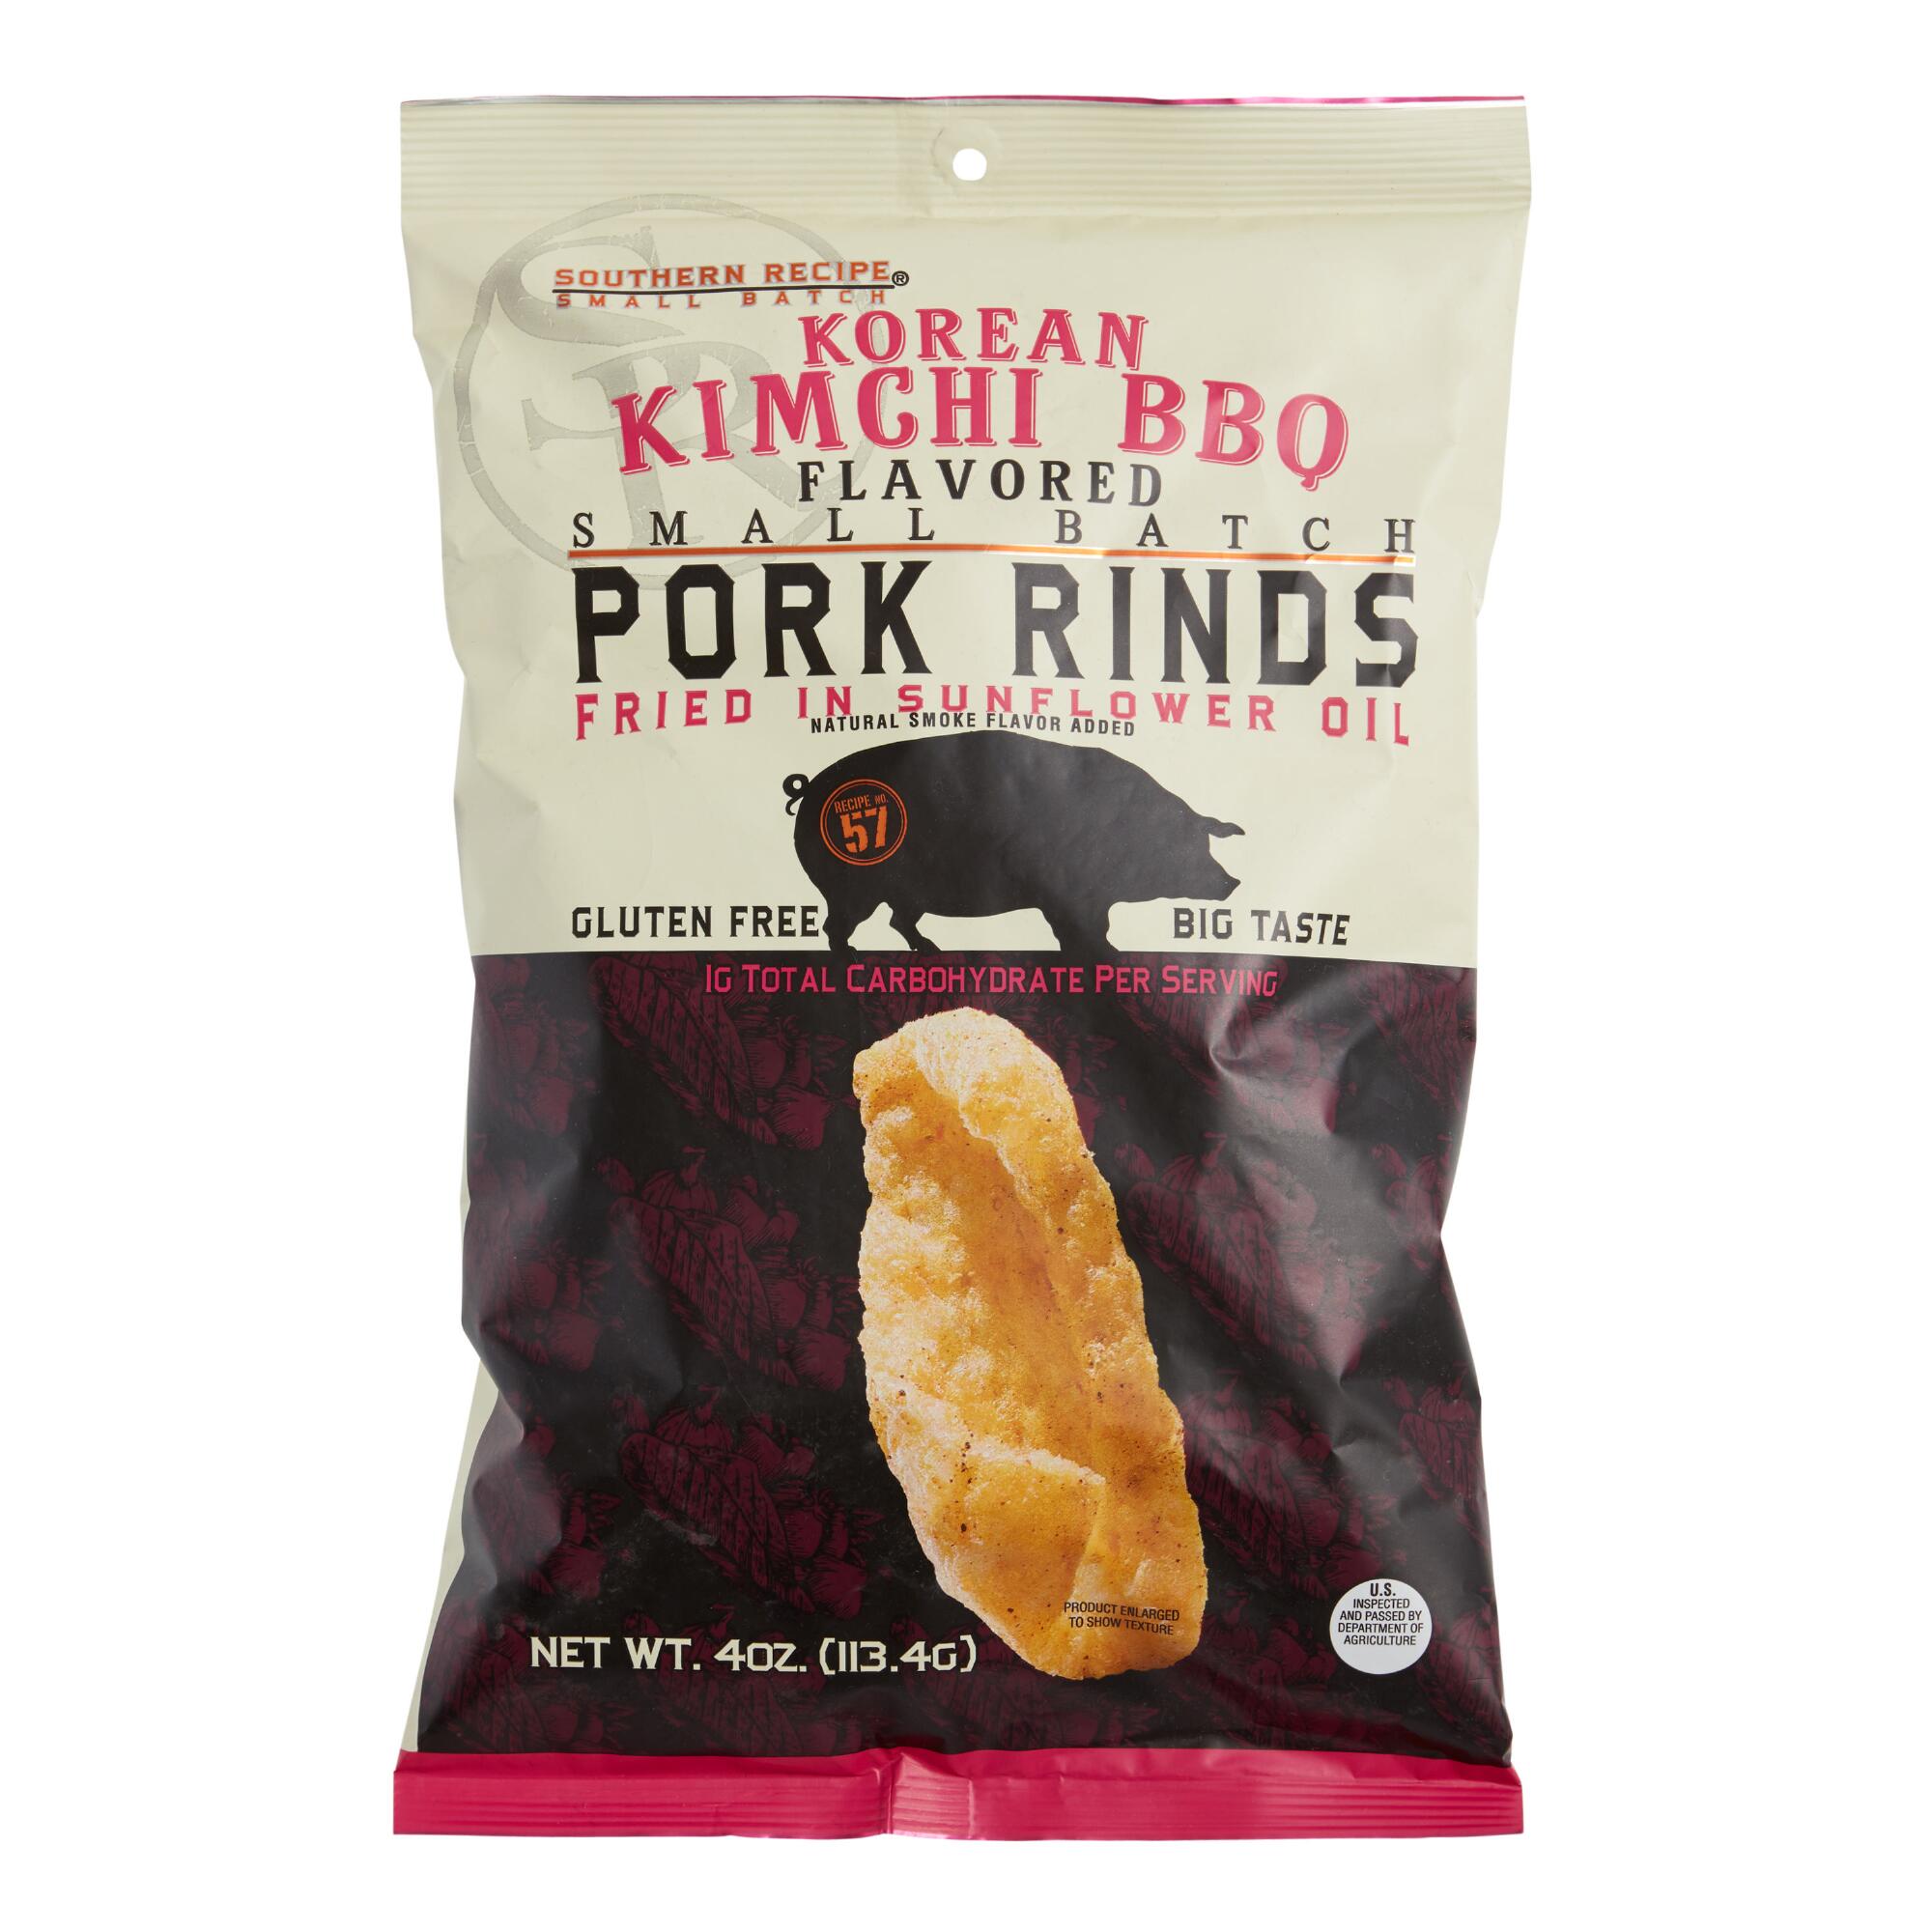 Southern Recipe Korean Kimchi BBQ Pork Rinds Set of 12 by World Market